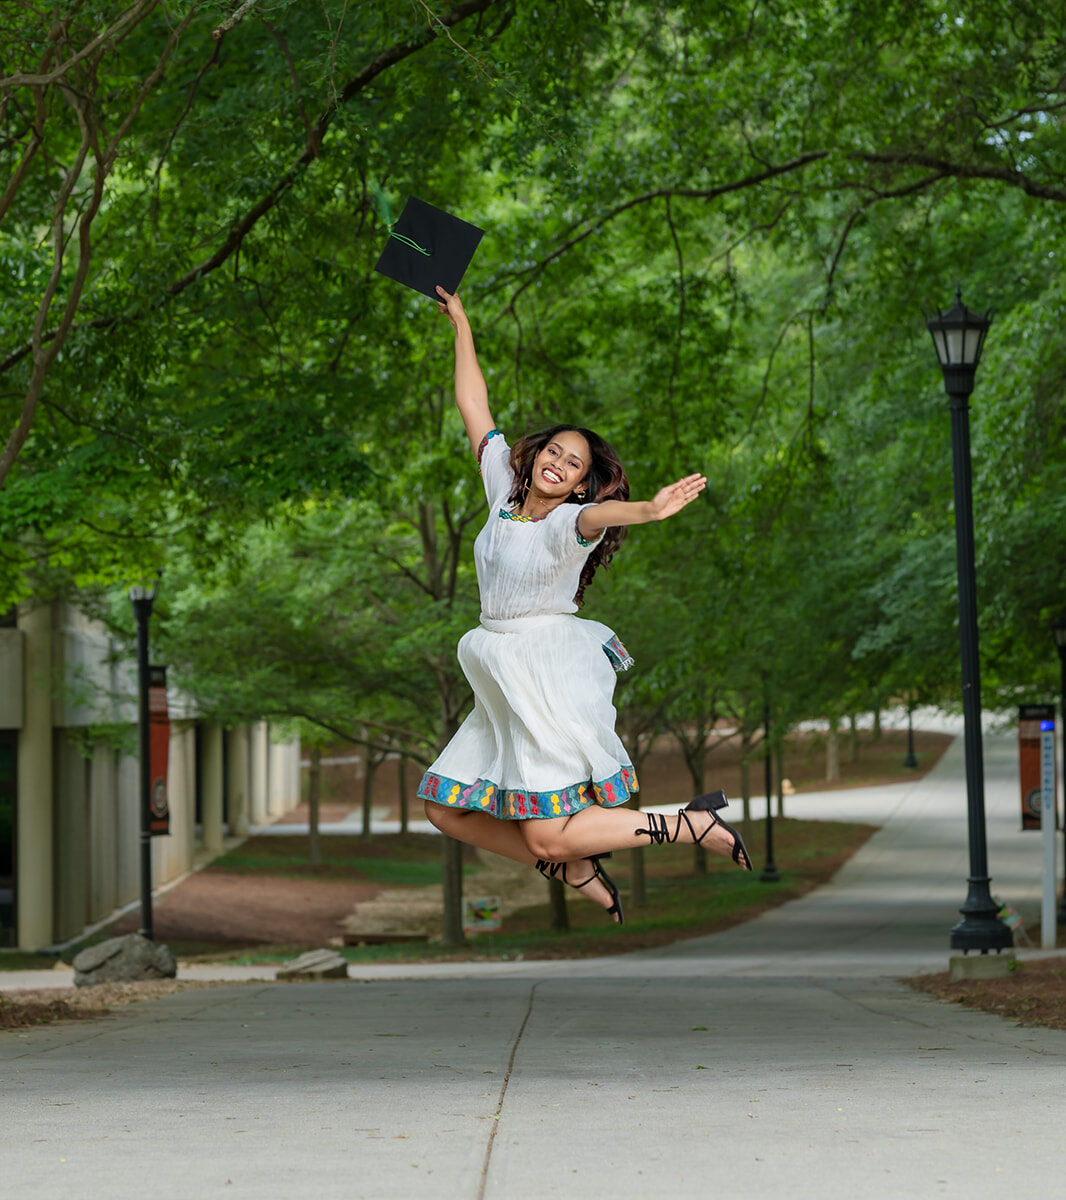 Portrait Photography Graduation Photo taken of client celebrating graduating from Mercy University Atlanta Campus